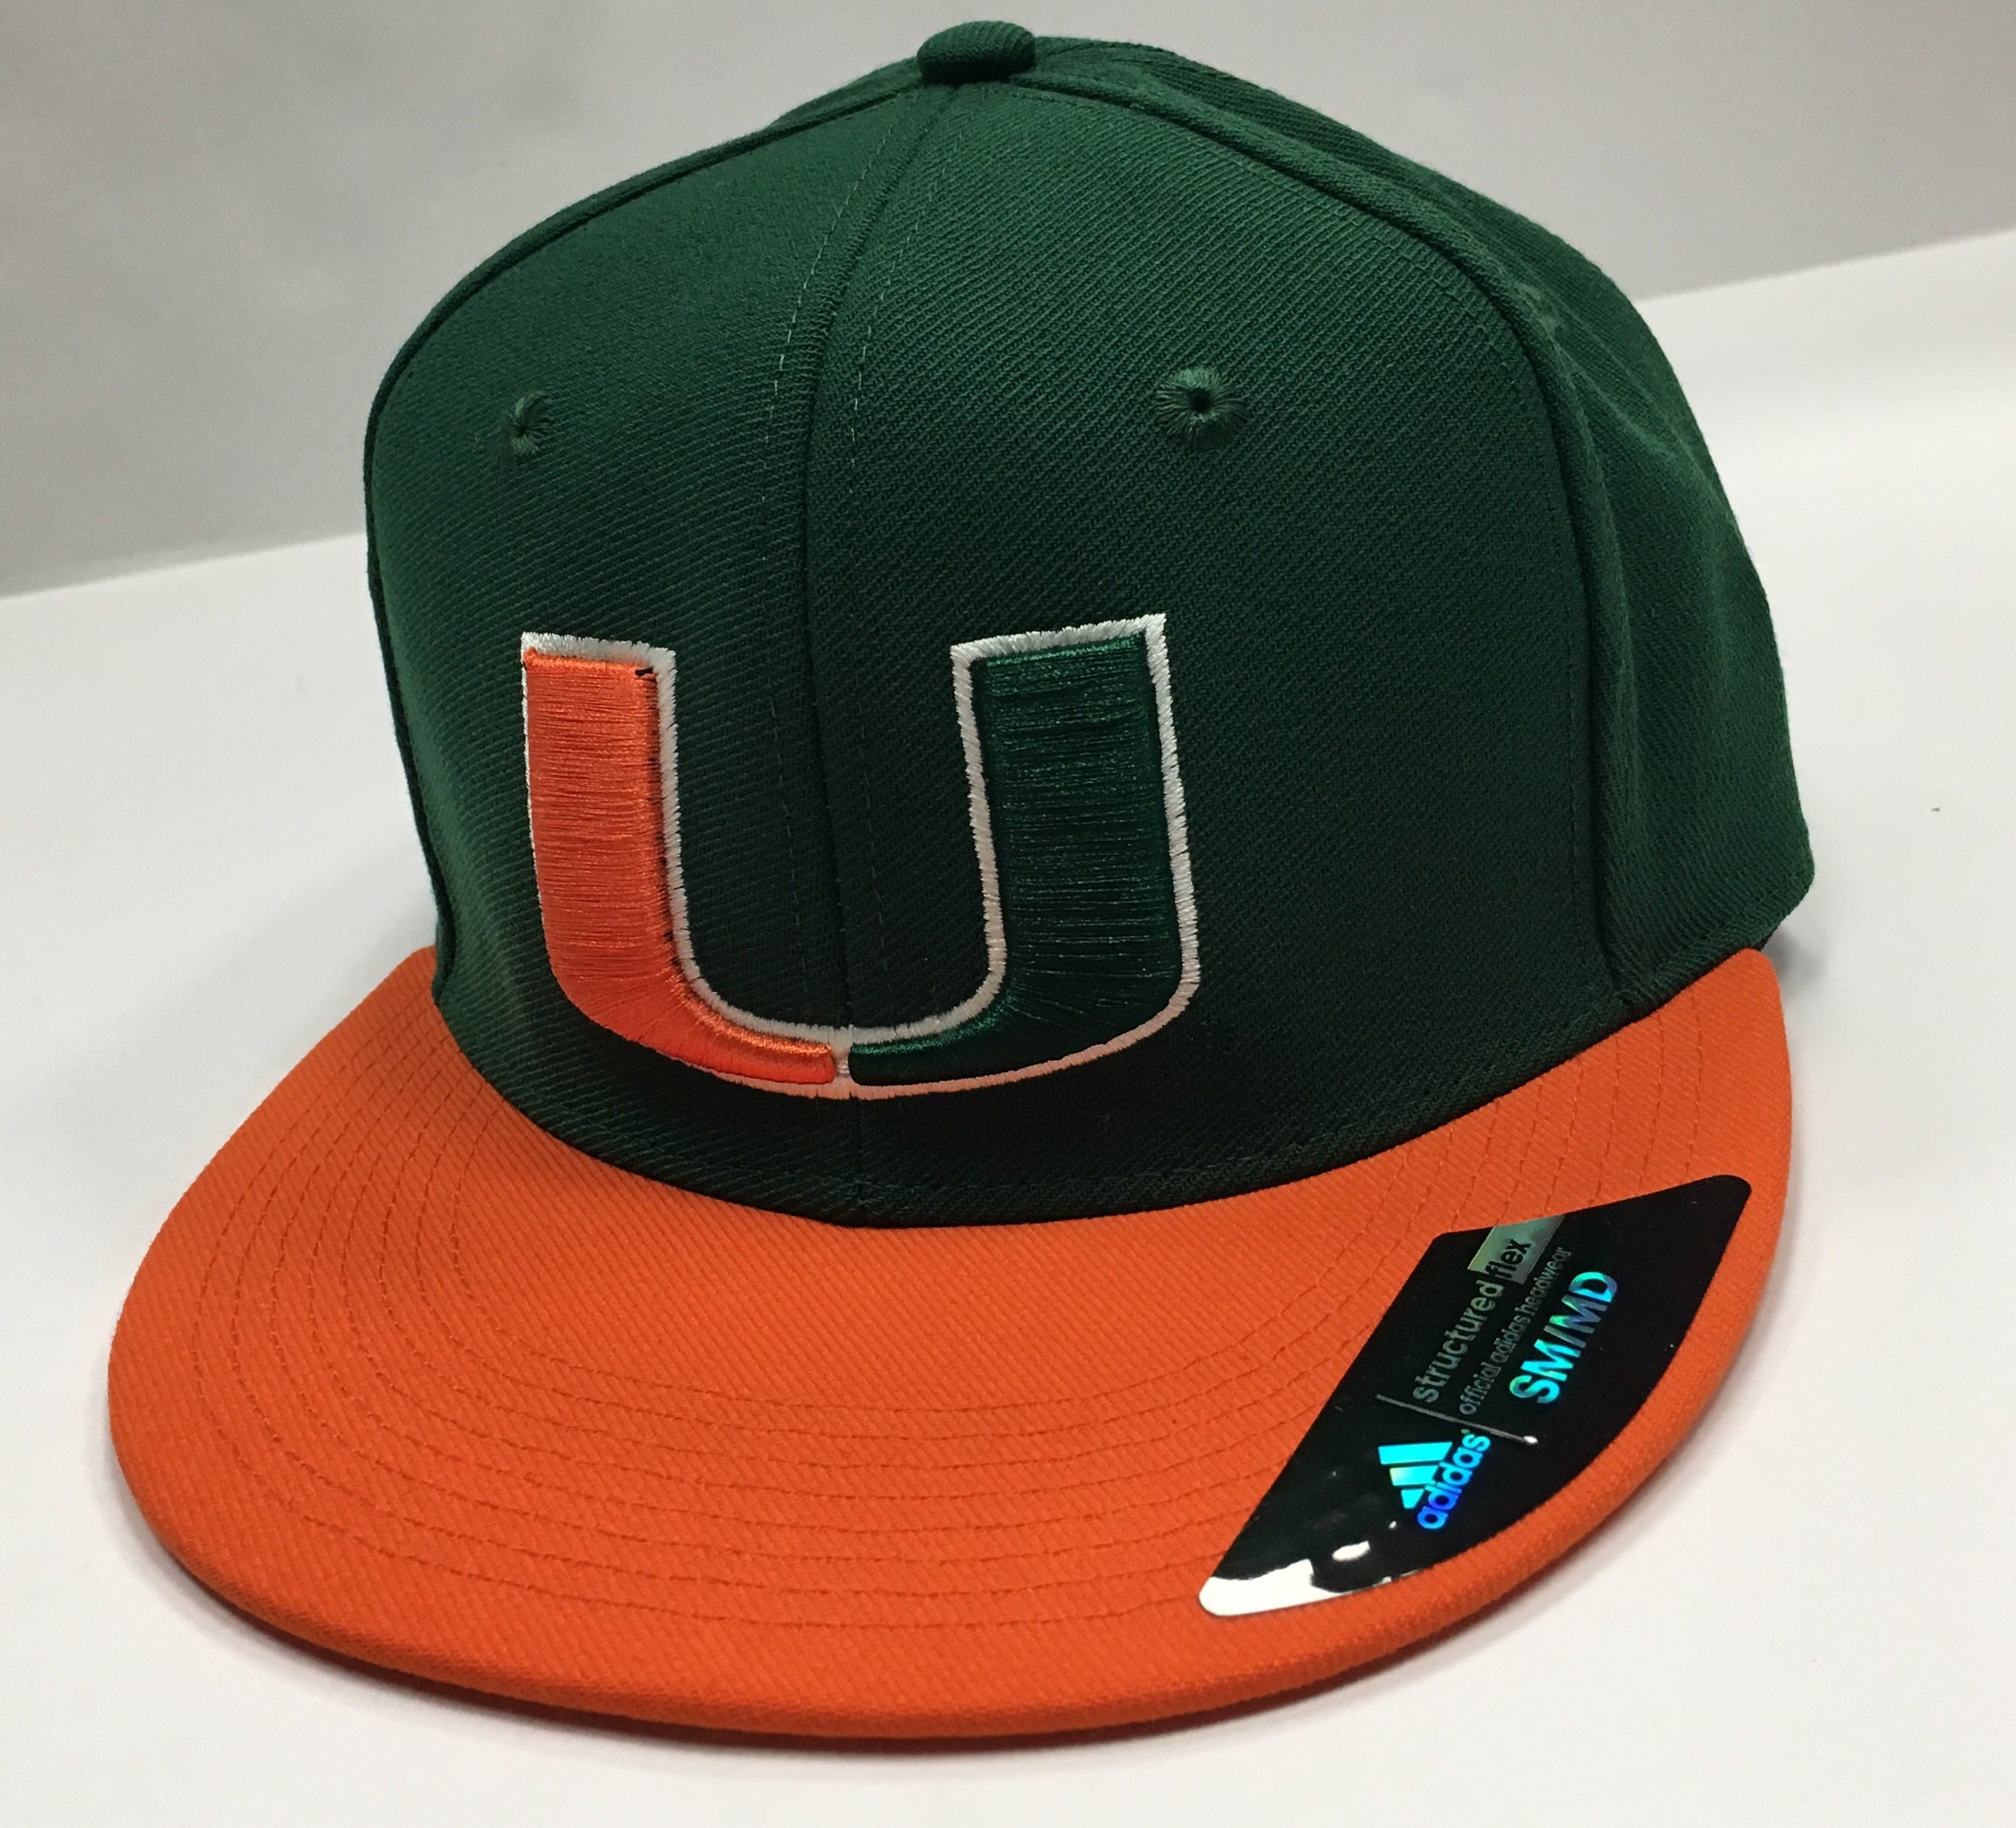 Miami Hurricanes adidas Flat Visor Flex Hat - Green/Orange